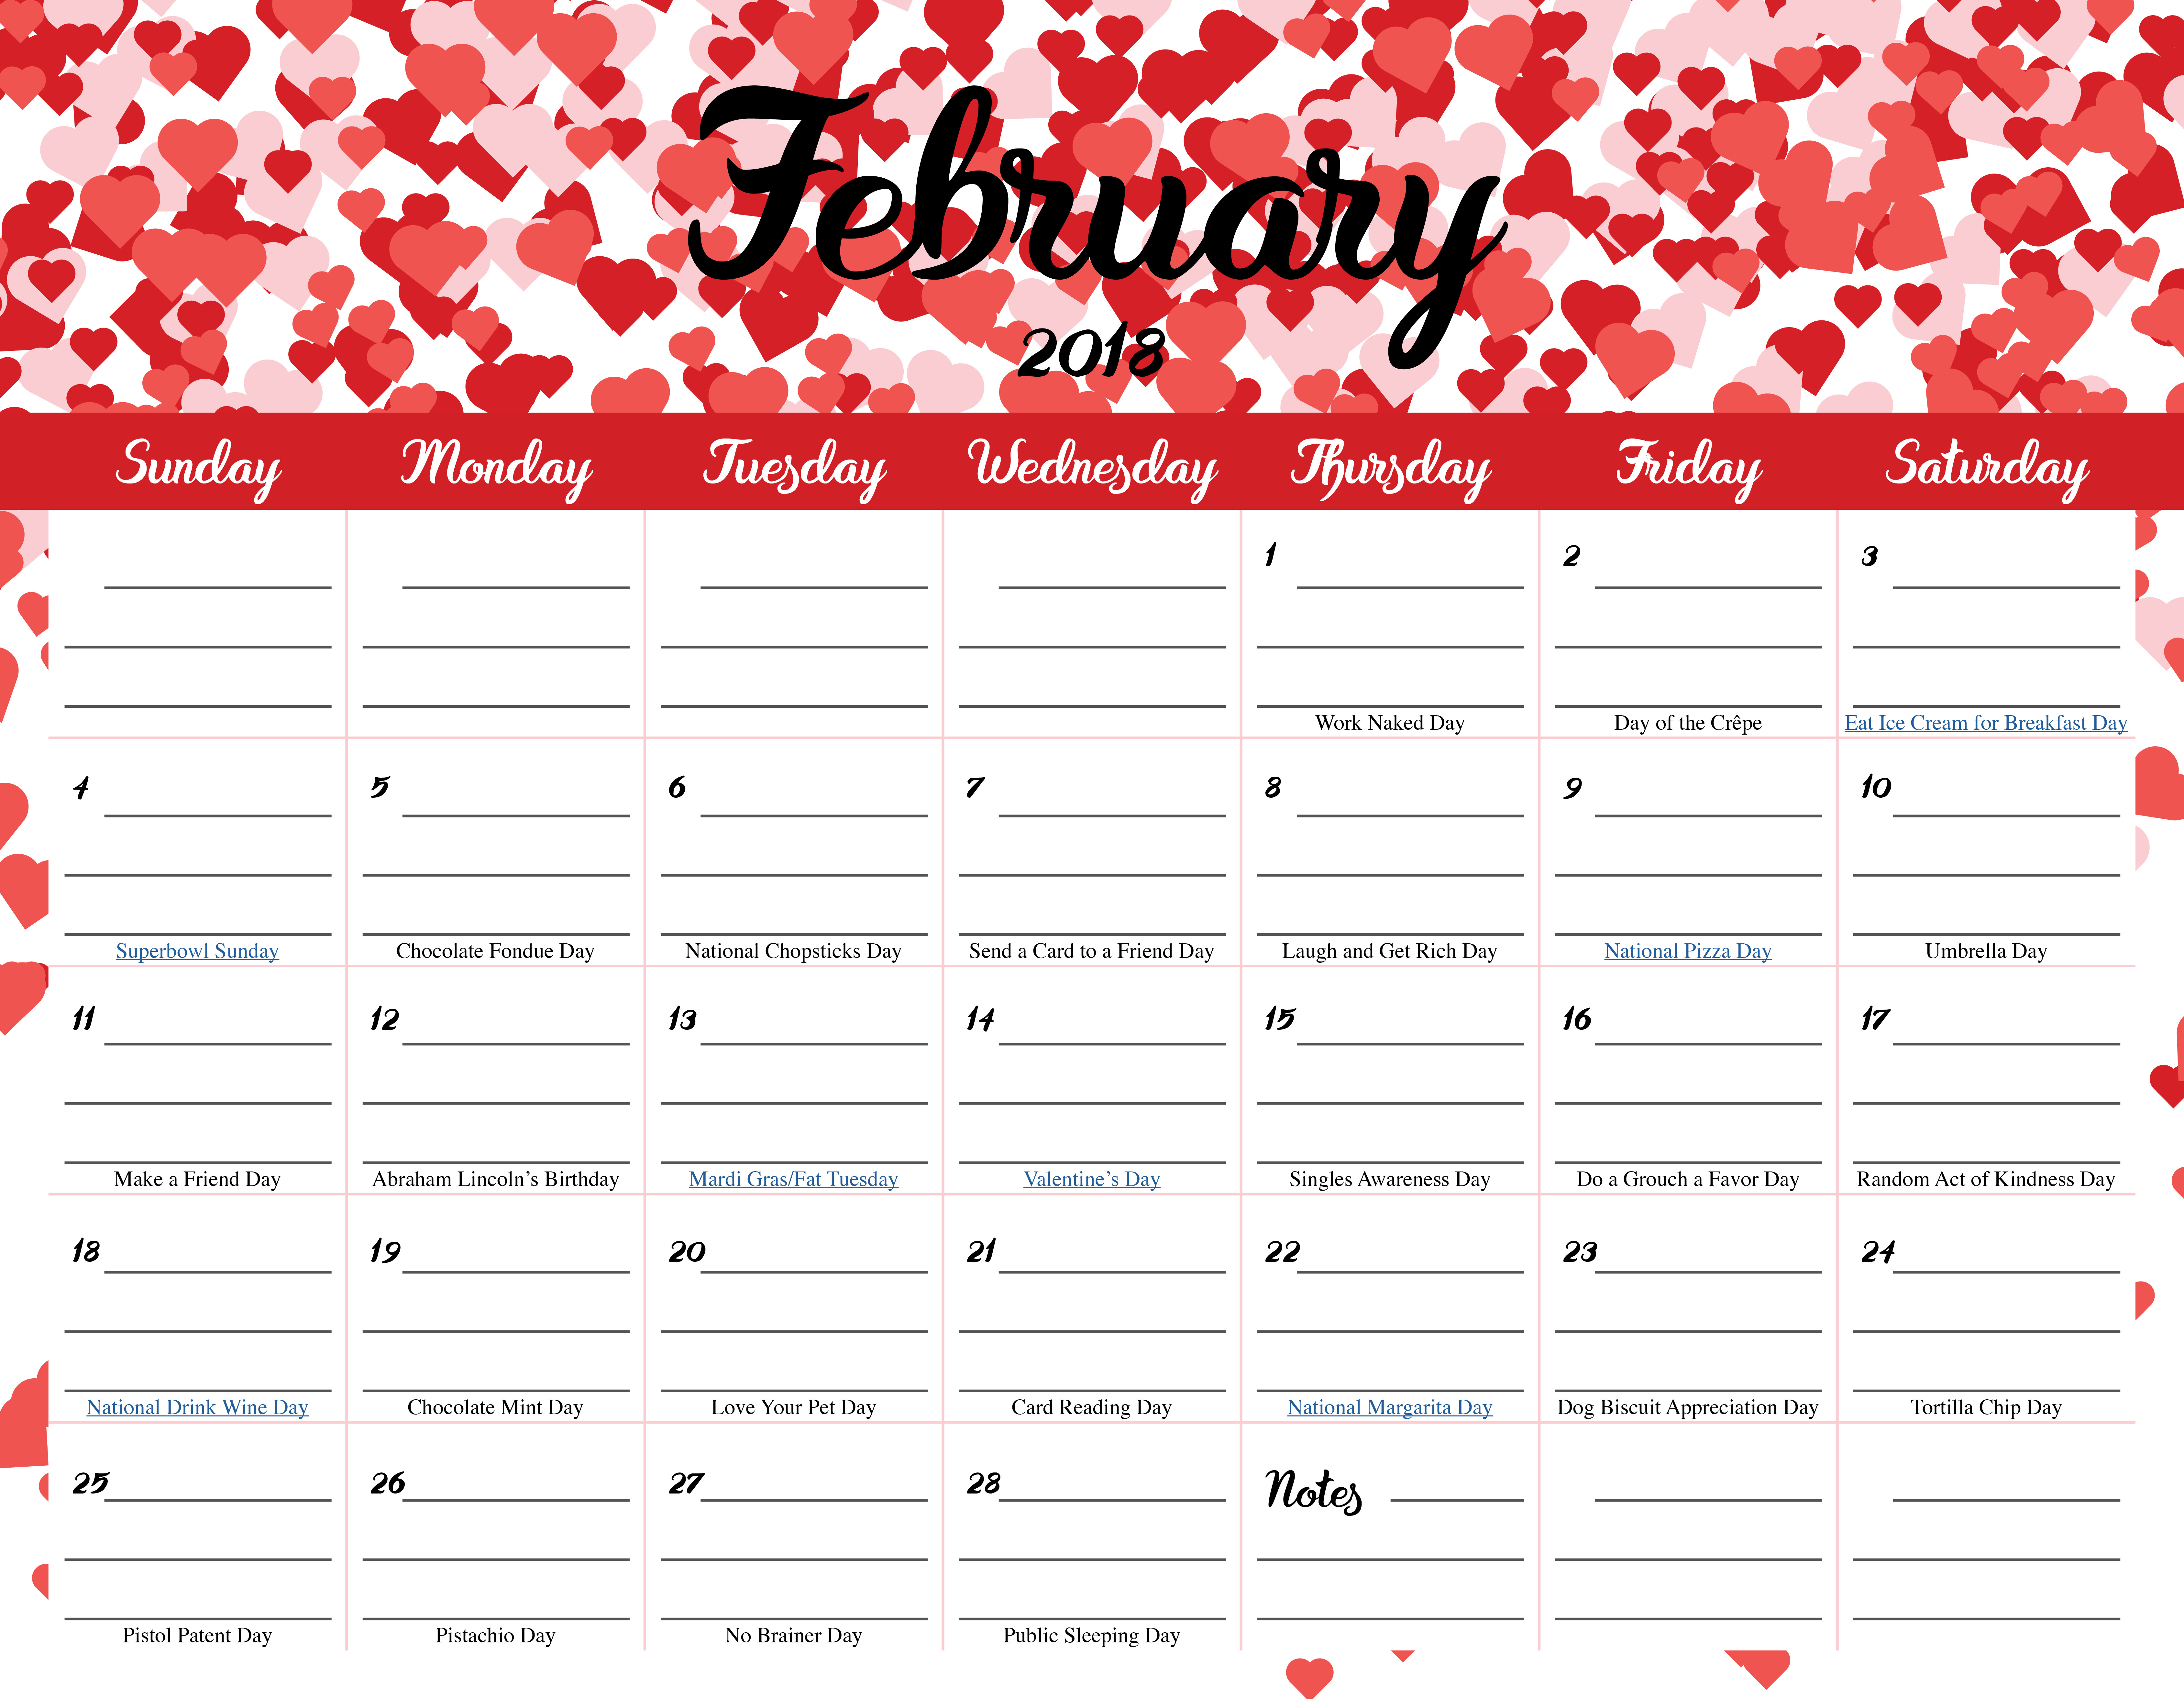 free-printable-calendar-for-february-2018